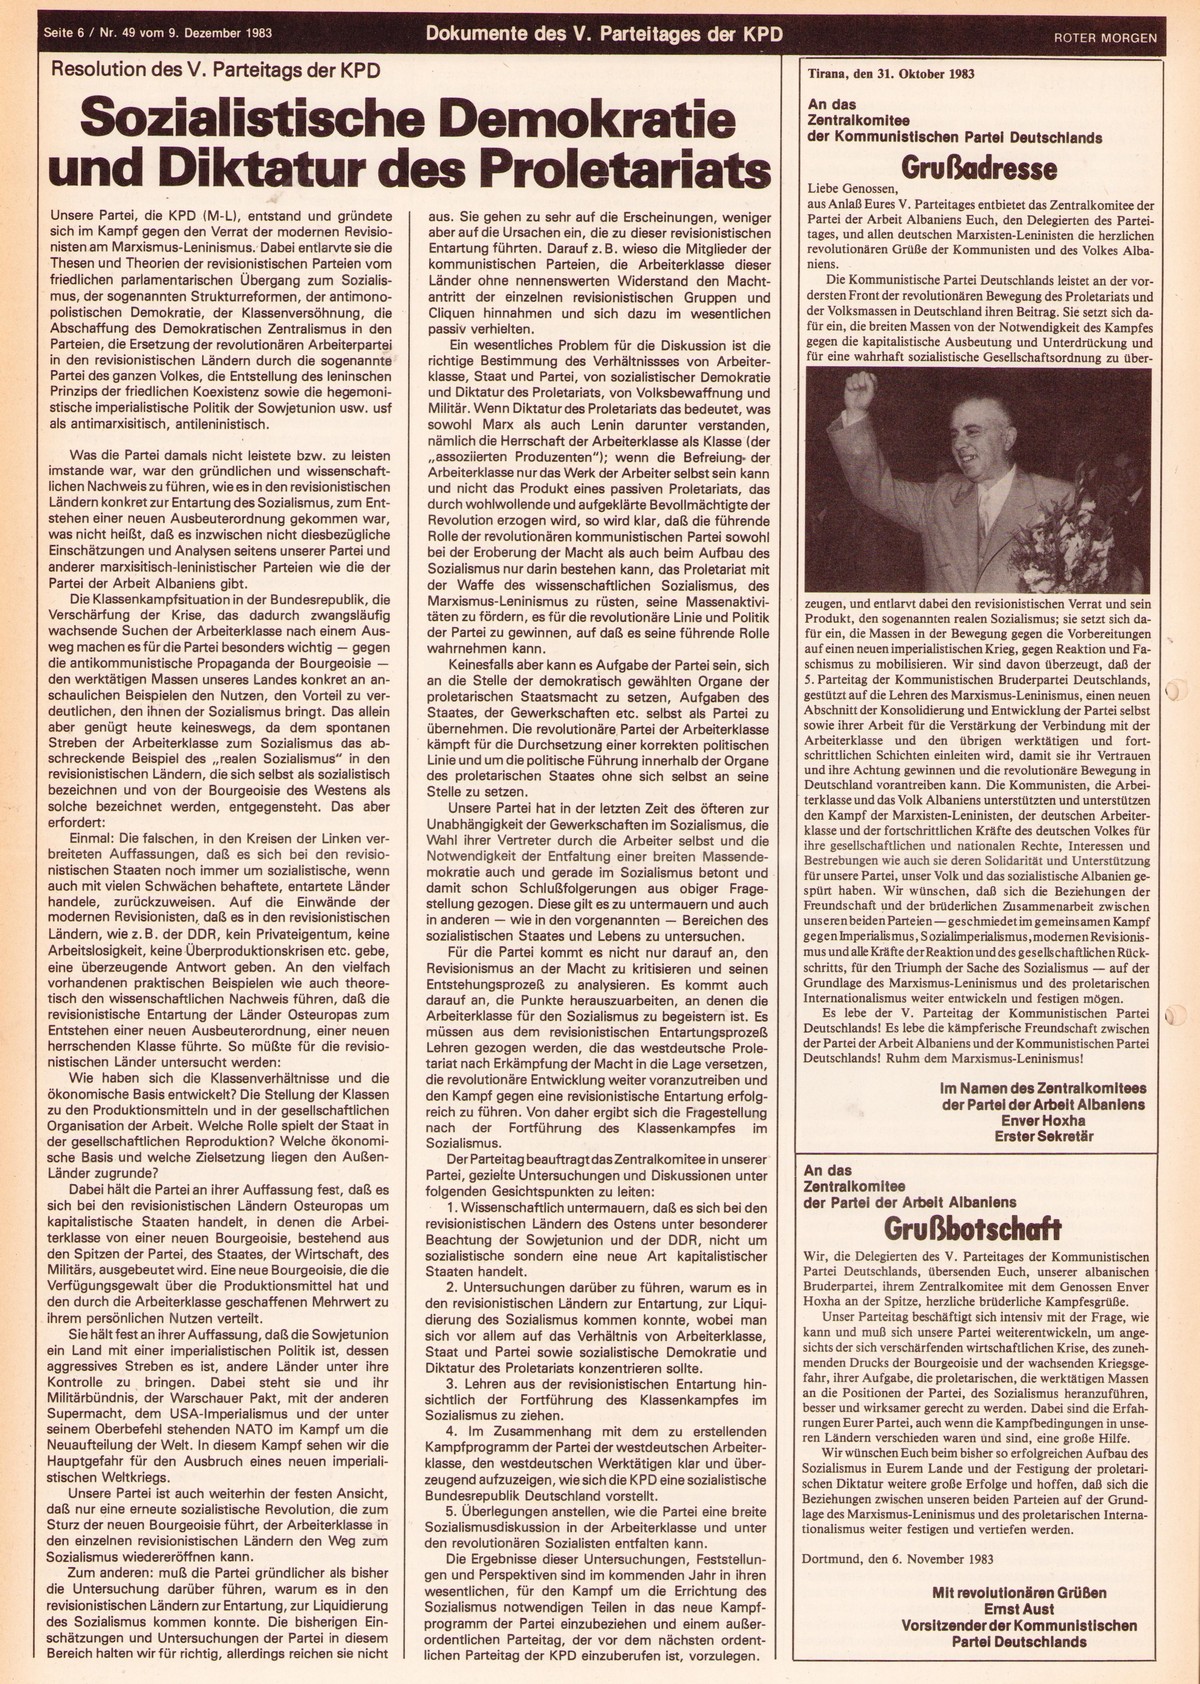 Roter Morgen, 17. Jg., 9. Dezember 1983, Nr. 49, Seite 6